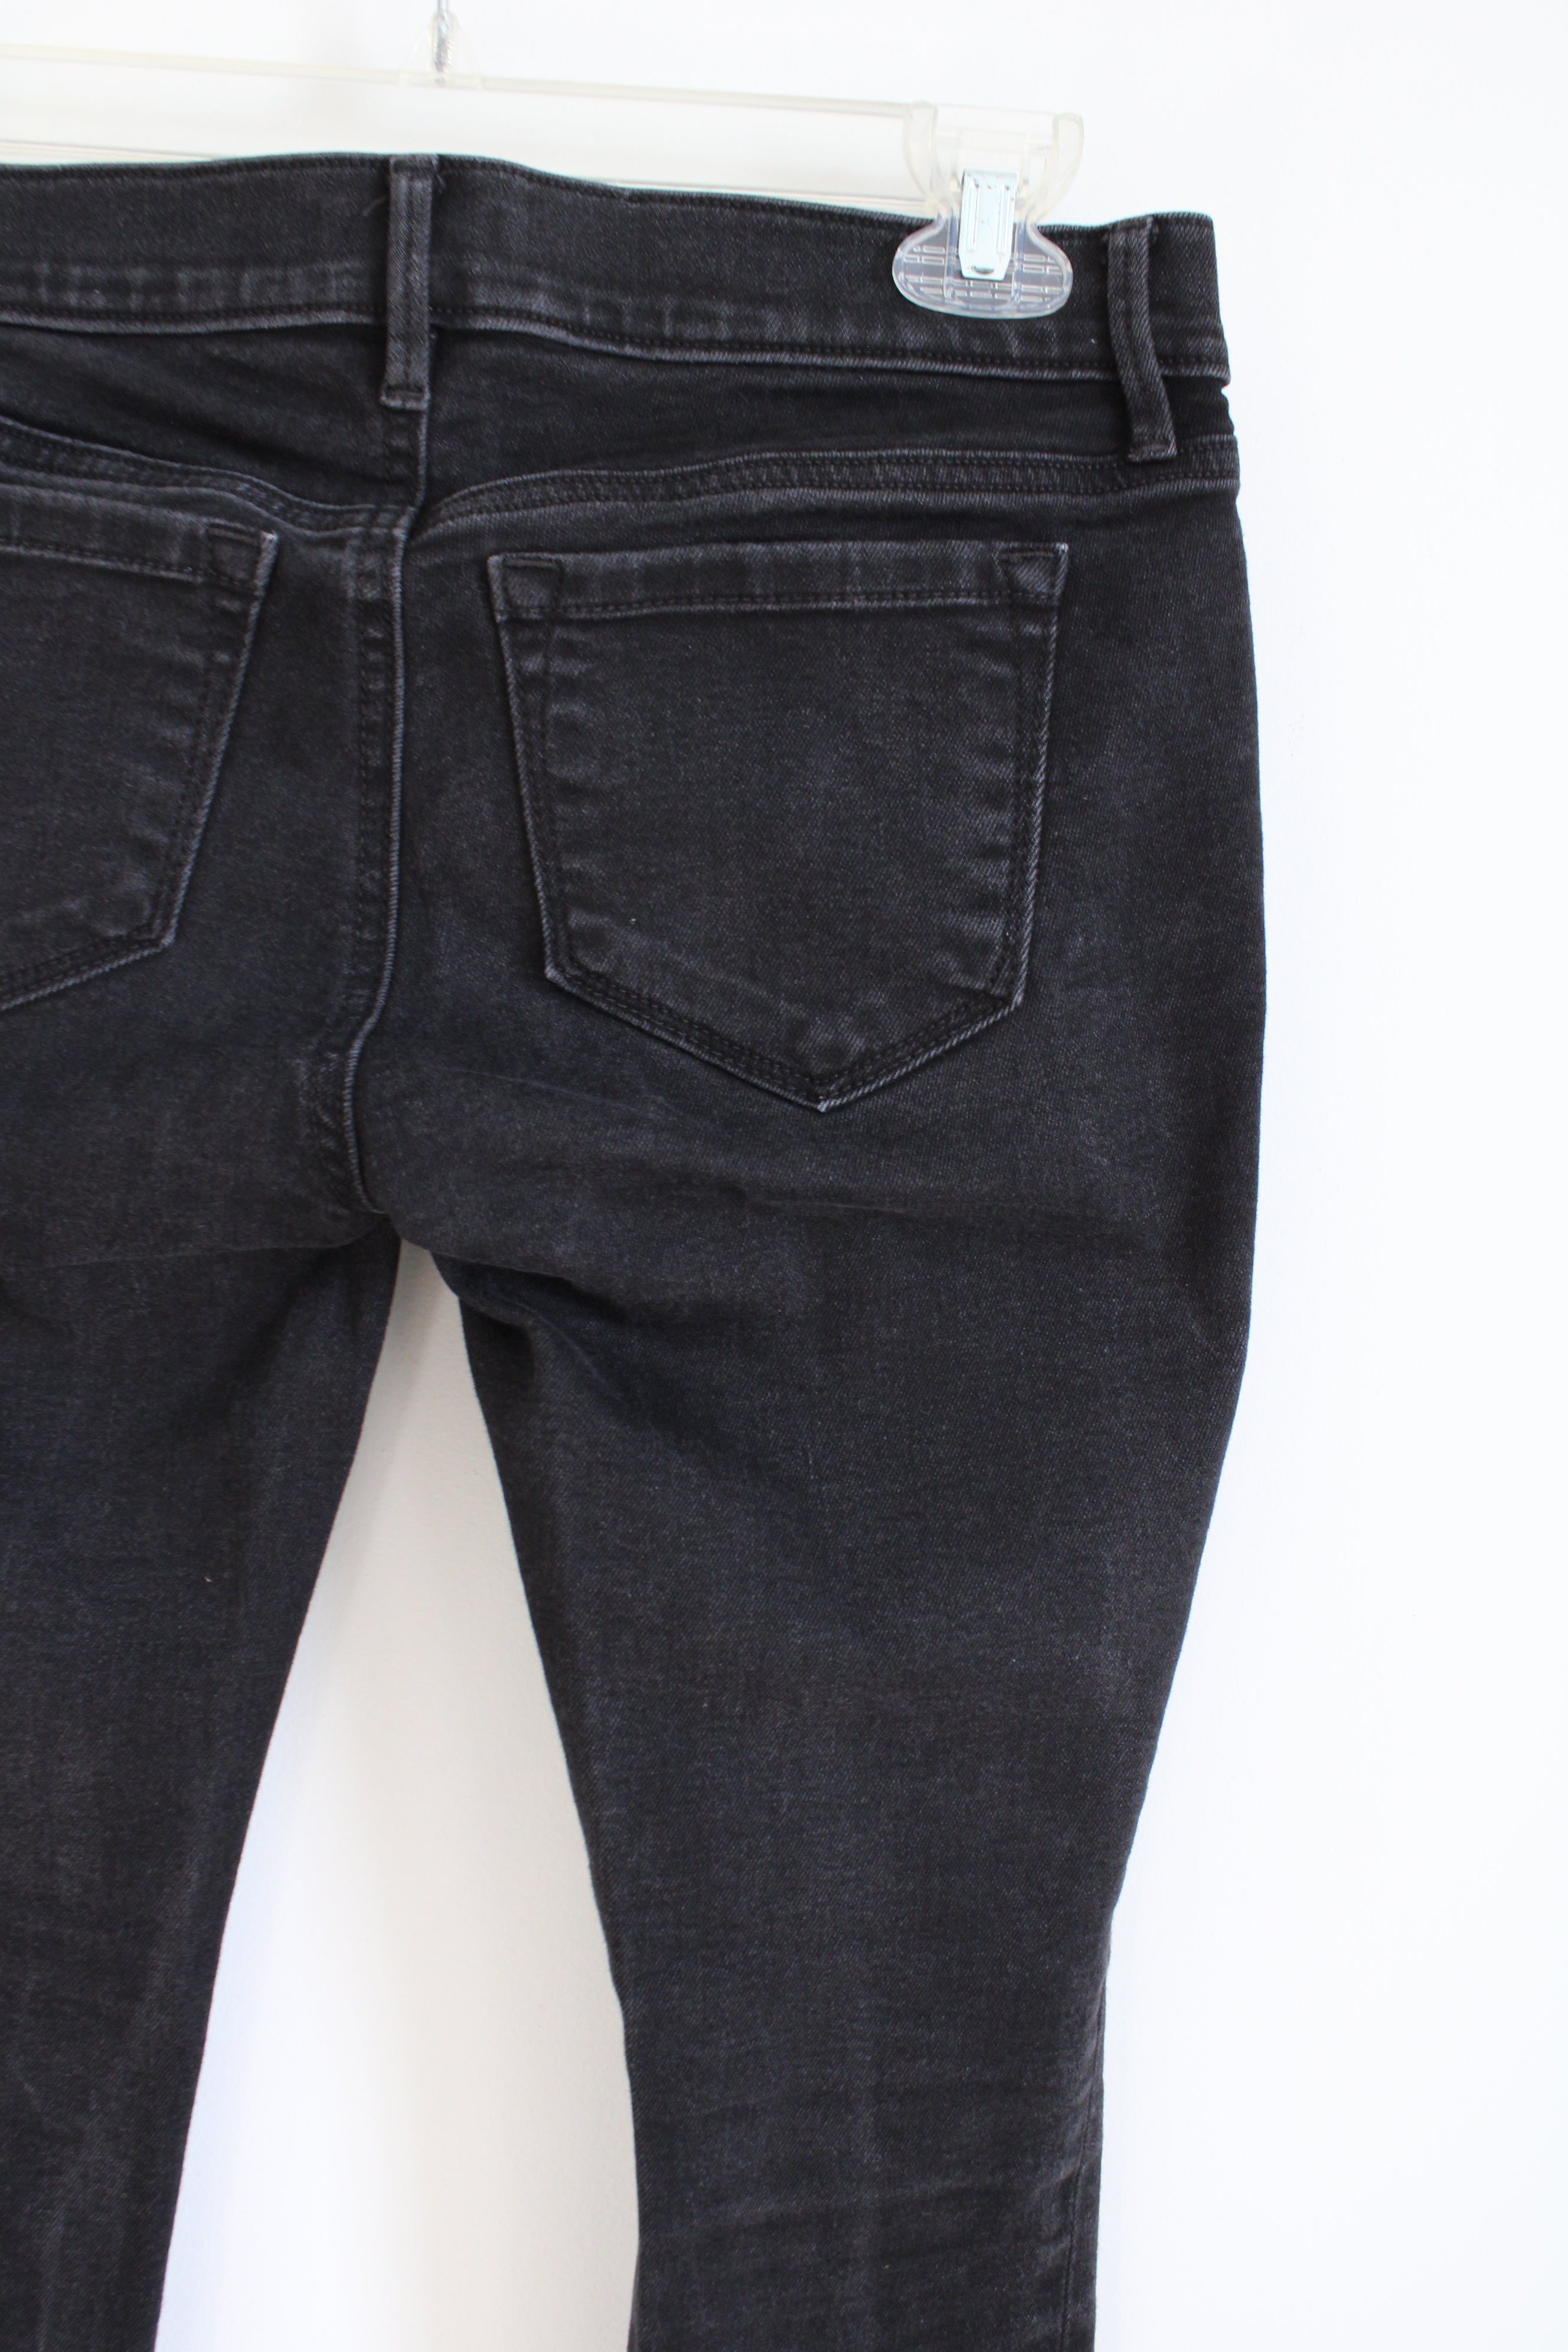 LOFT Modern Skinny Black Jeans | 0 Petite